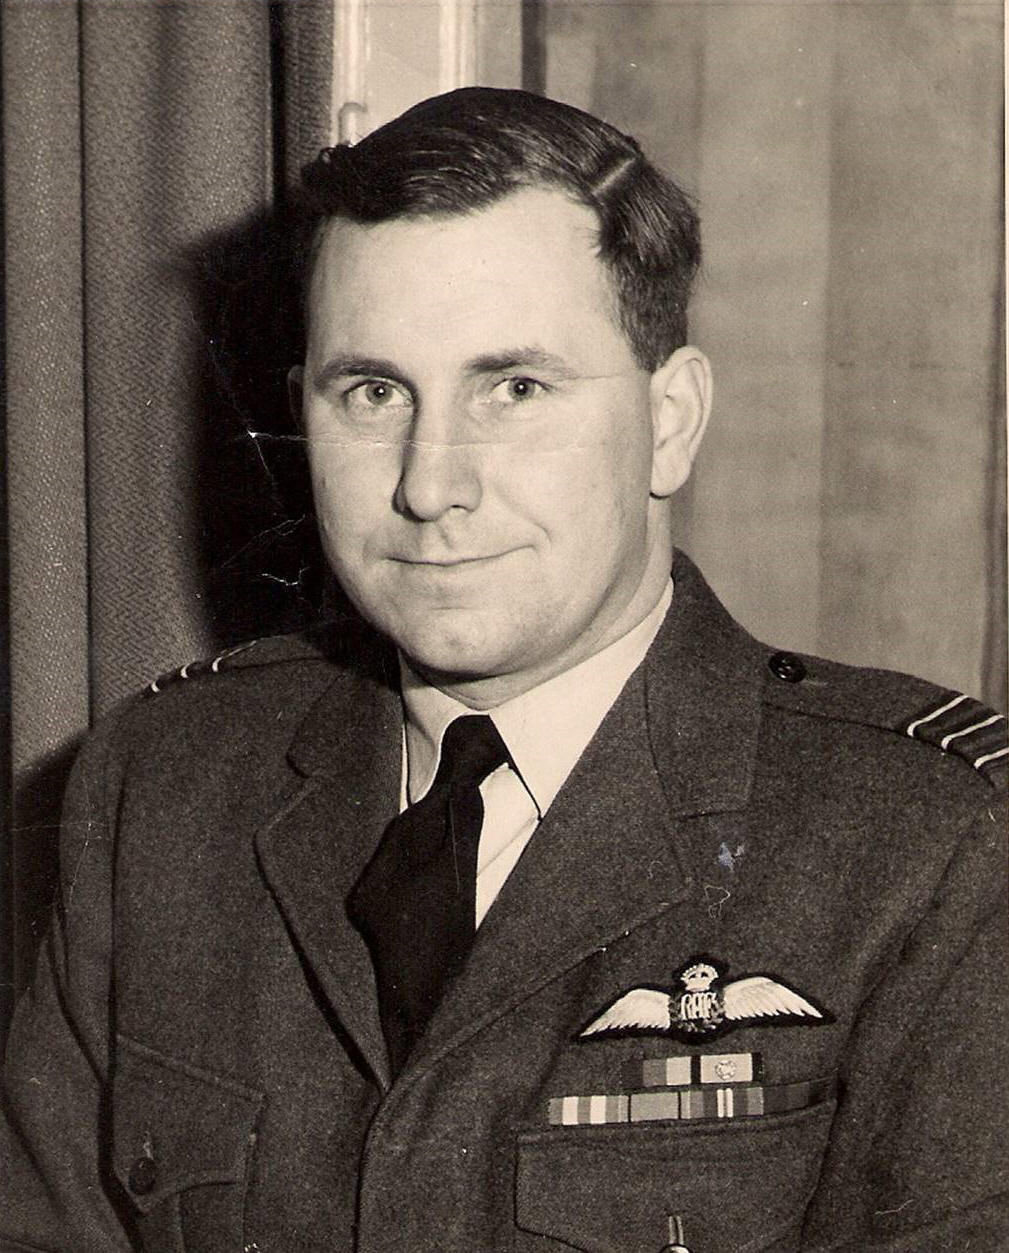 J E Innes-Crump as a Wing Commander